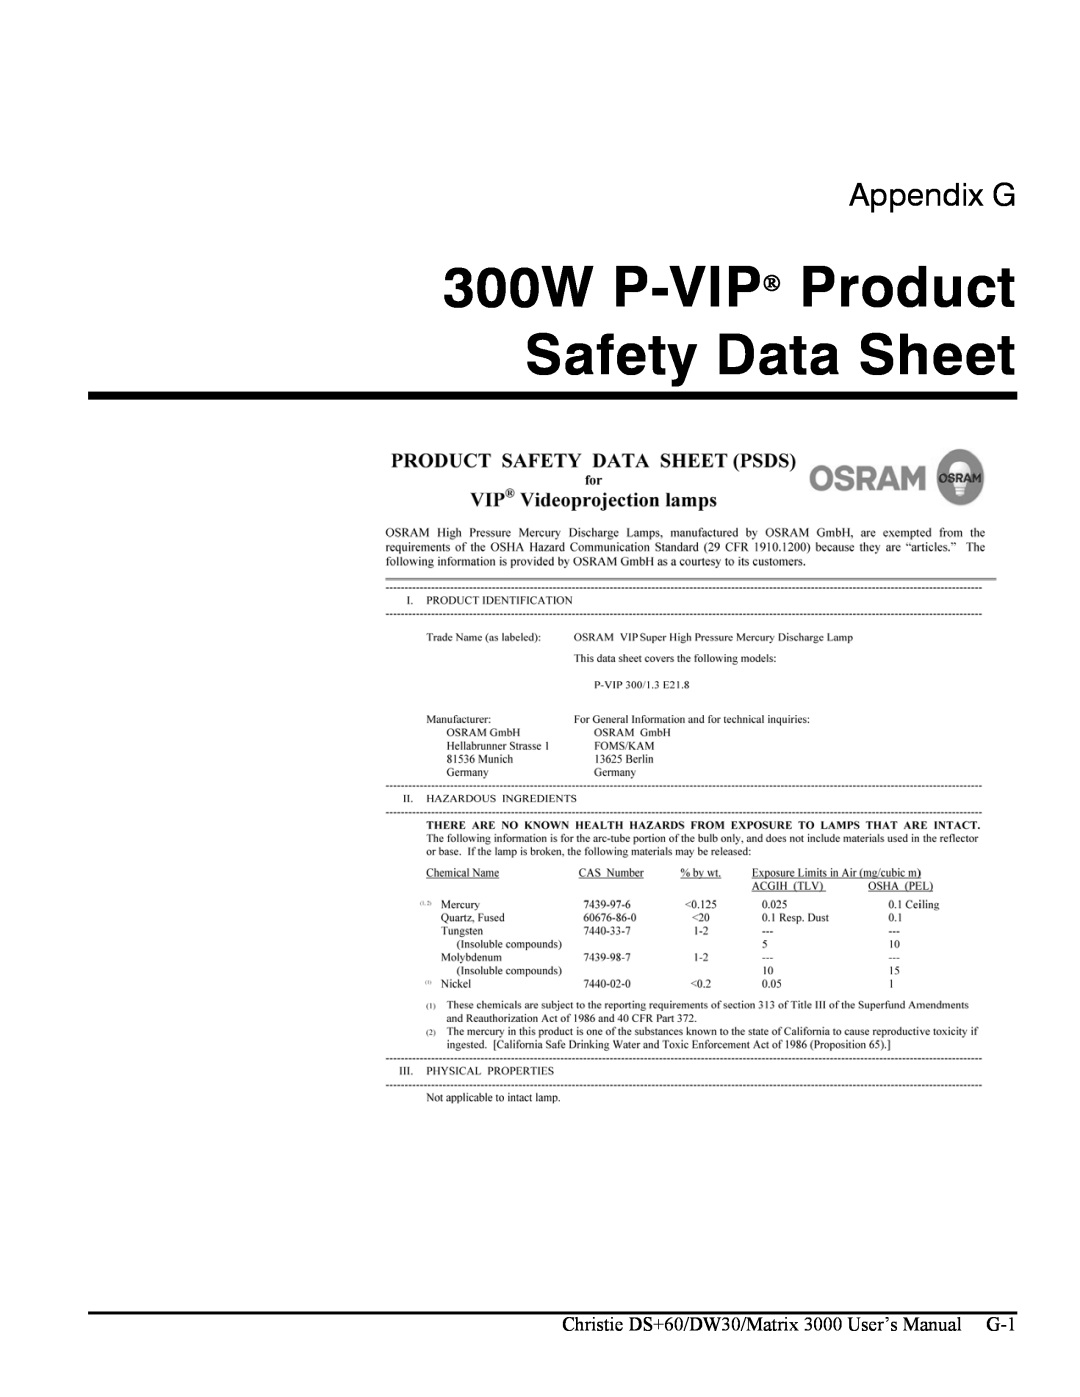 Texas Instruments MATRIX 3000, DW30 user manual 300W P-VIP→ Product Safety Data Sheet, Appendix G 